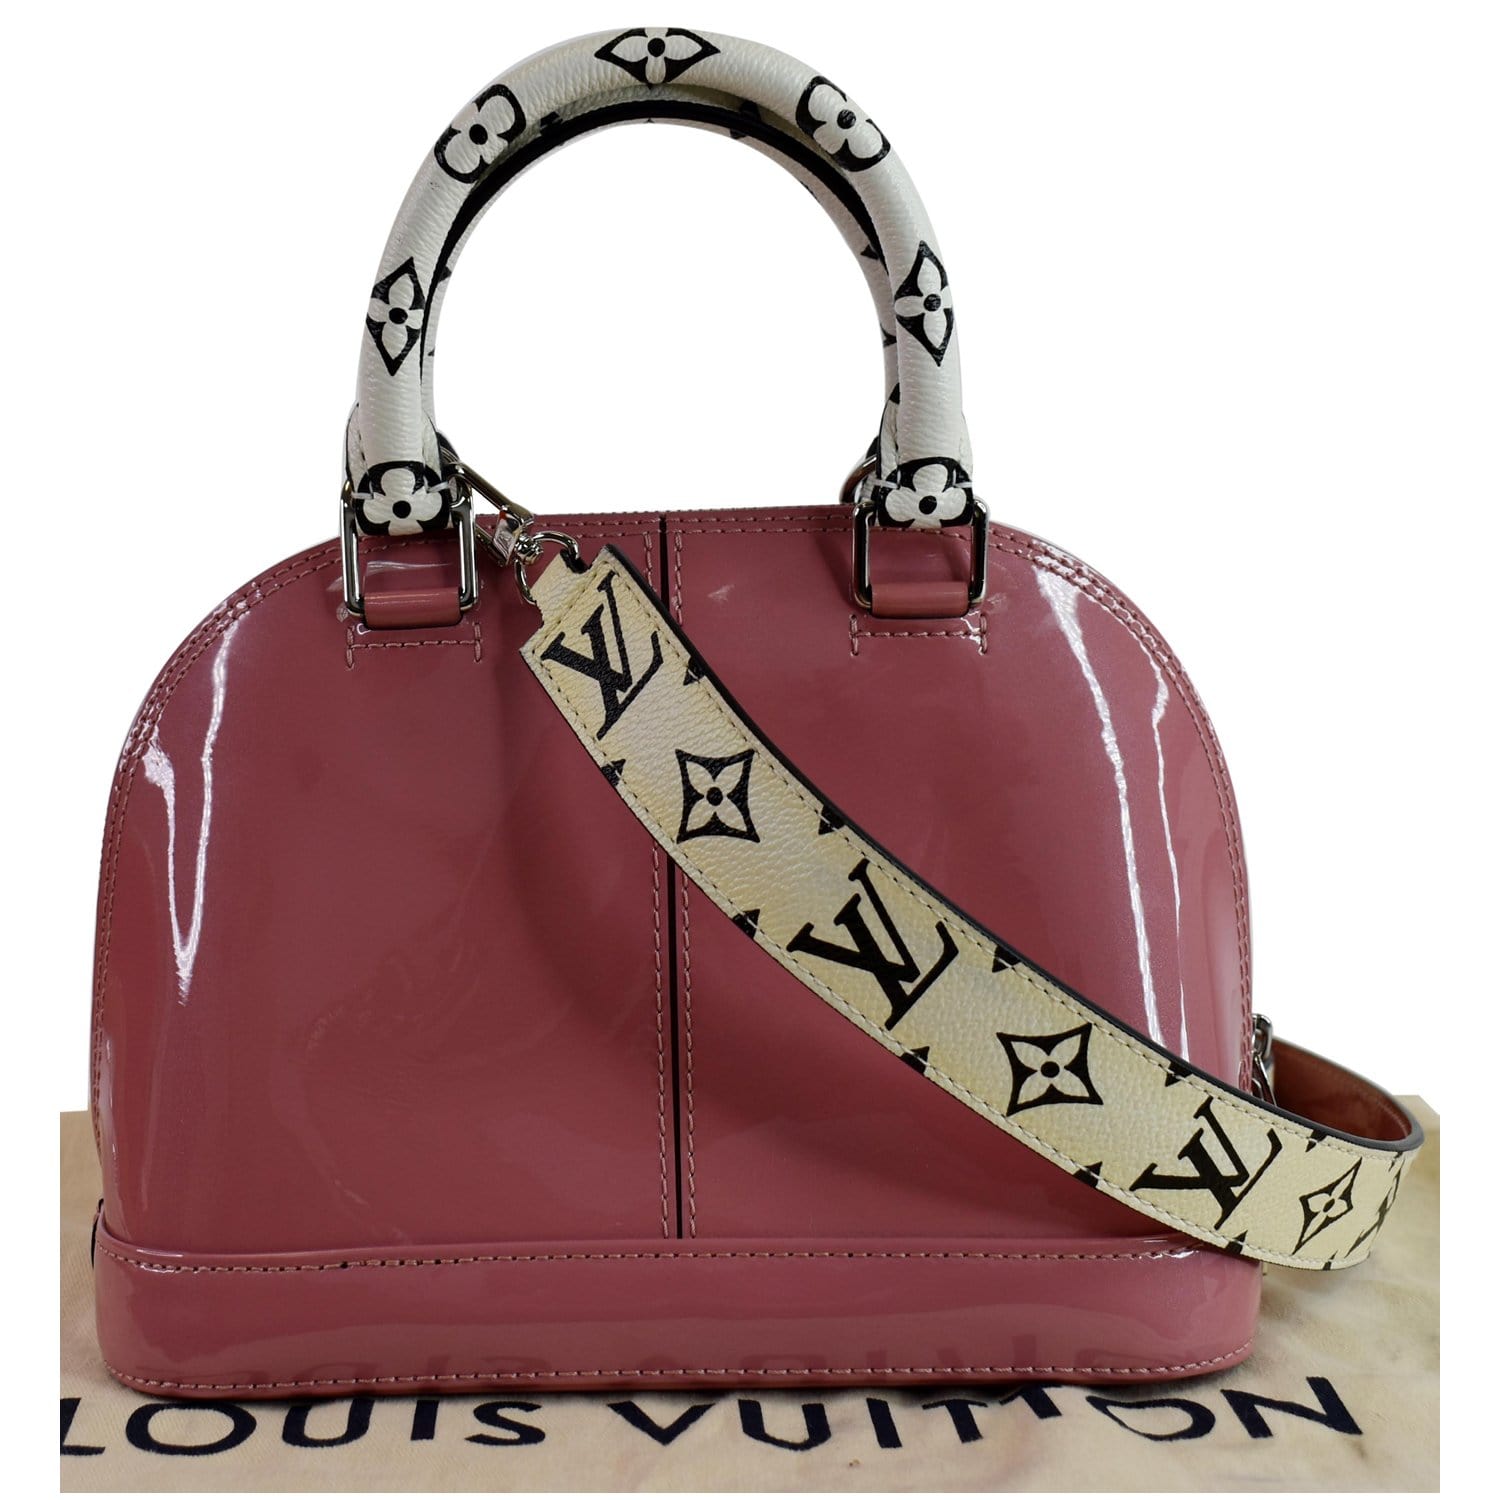 LOUIS VUITTON Monogram Alma PM w/ strap  Louis vuitton handbags outlet,  Louis vuitton dress, Designer handbags louis vuitton